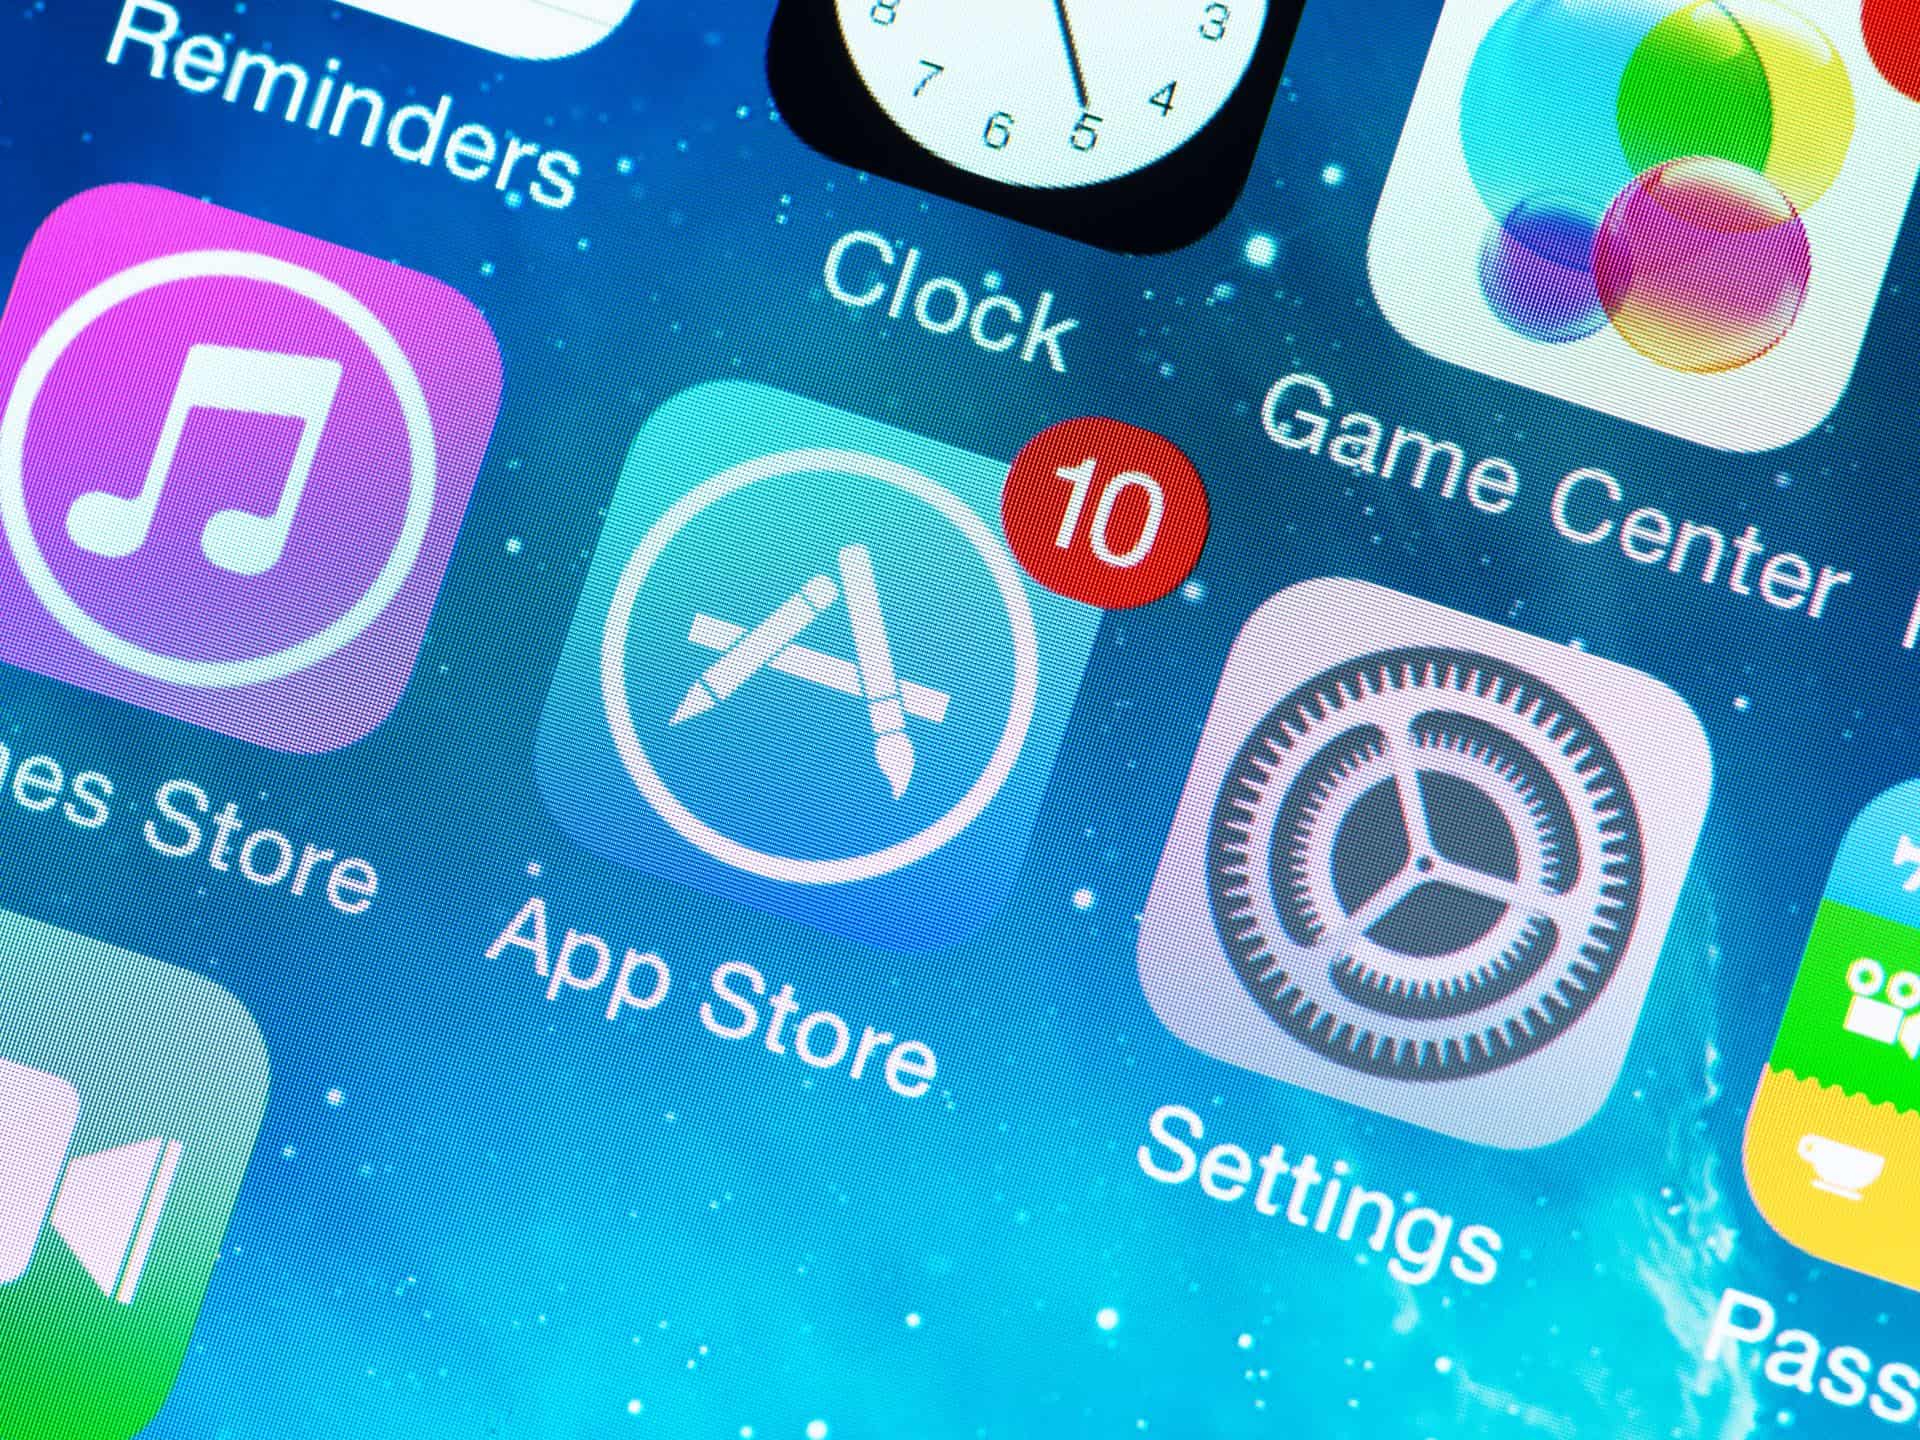 7 dicas para evitar instalar apps falsos no iPhone ou iPad - Olhar Digital